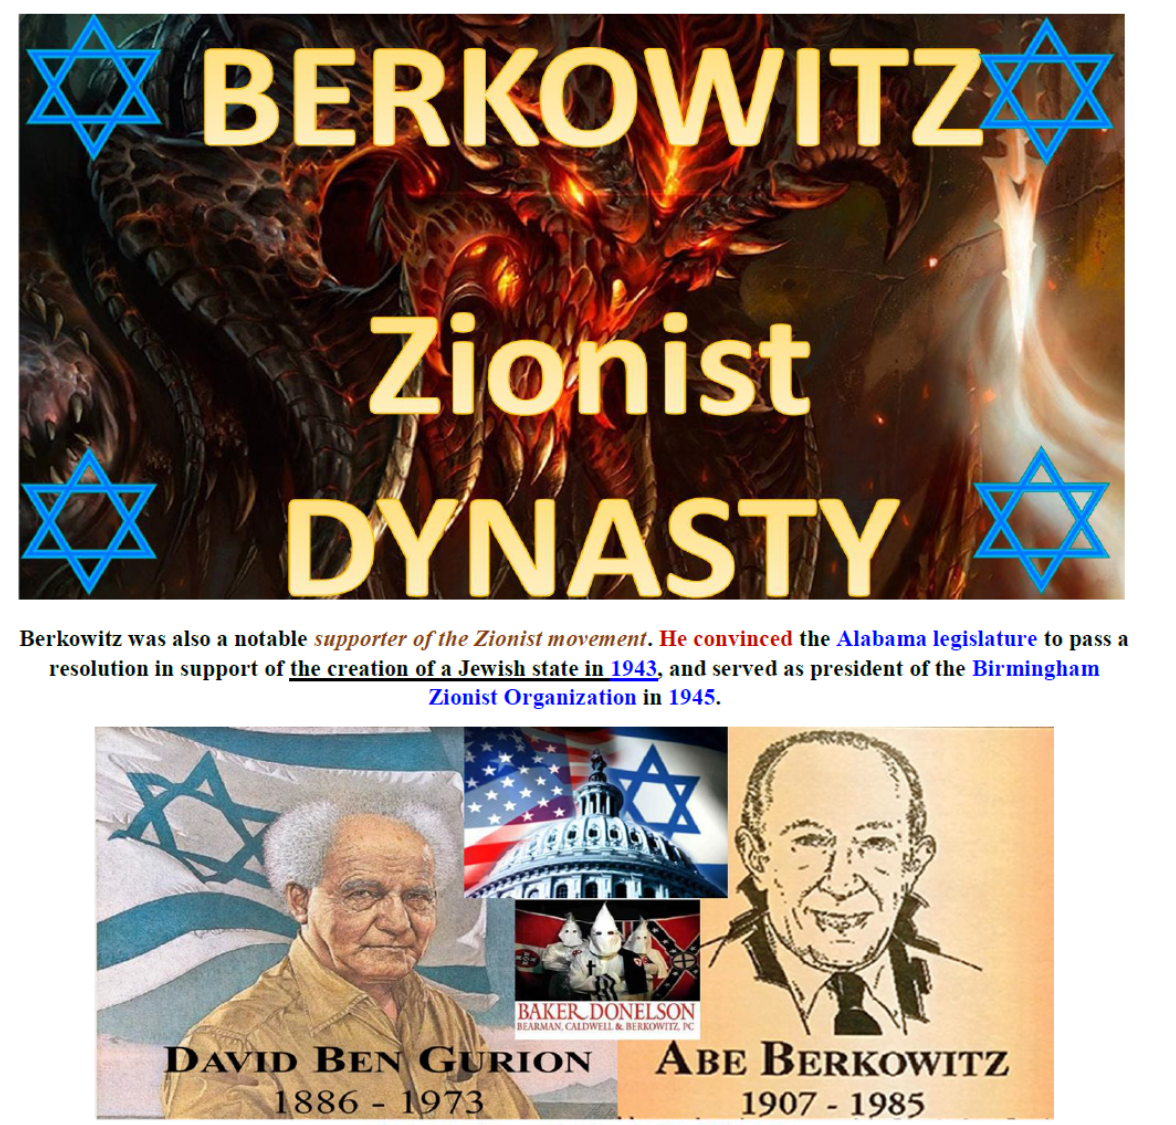 Baker Donelson Berkowitz ZIONIST Dynasty